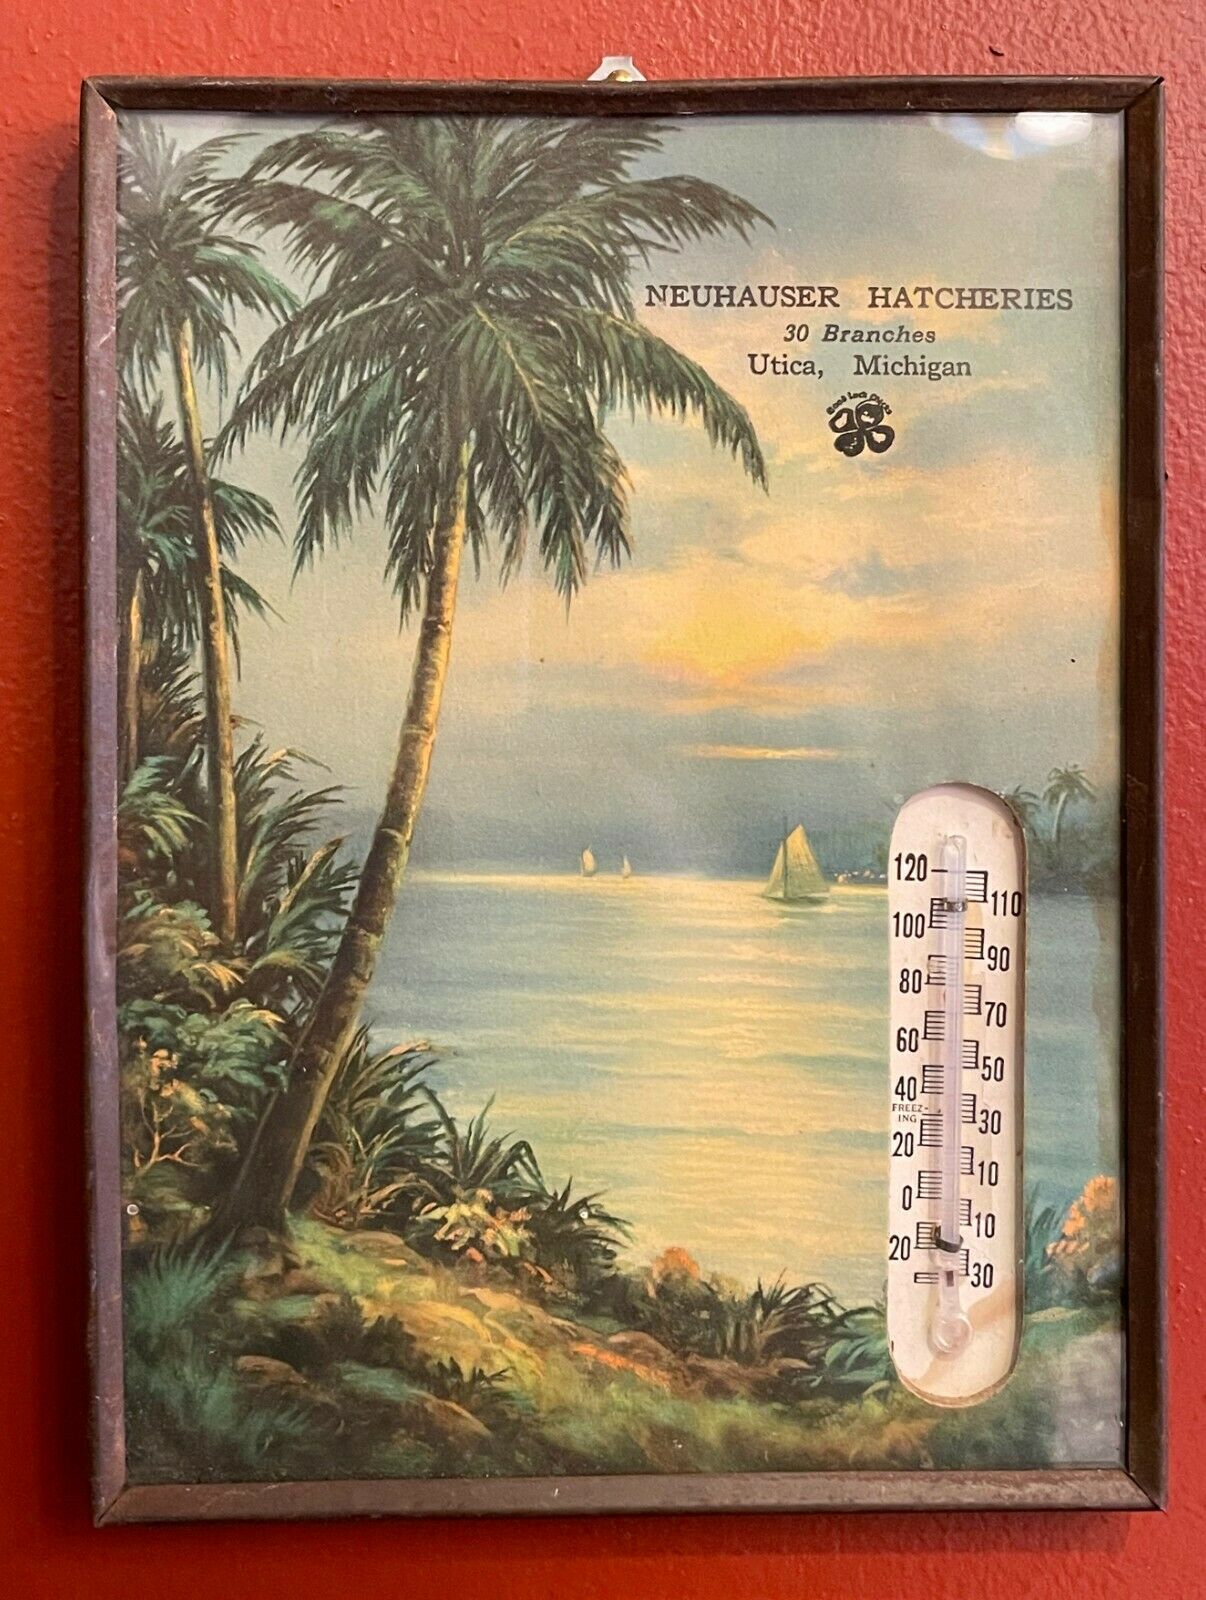 Vintage Advertising Thermometer, Neuhauser Hatcheries, Utica Michigan, Tropical